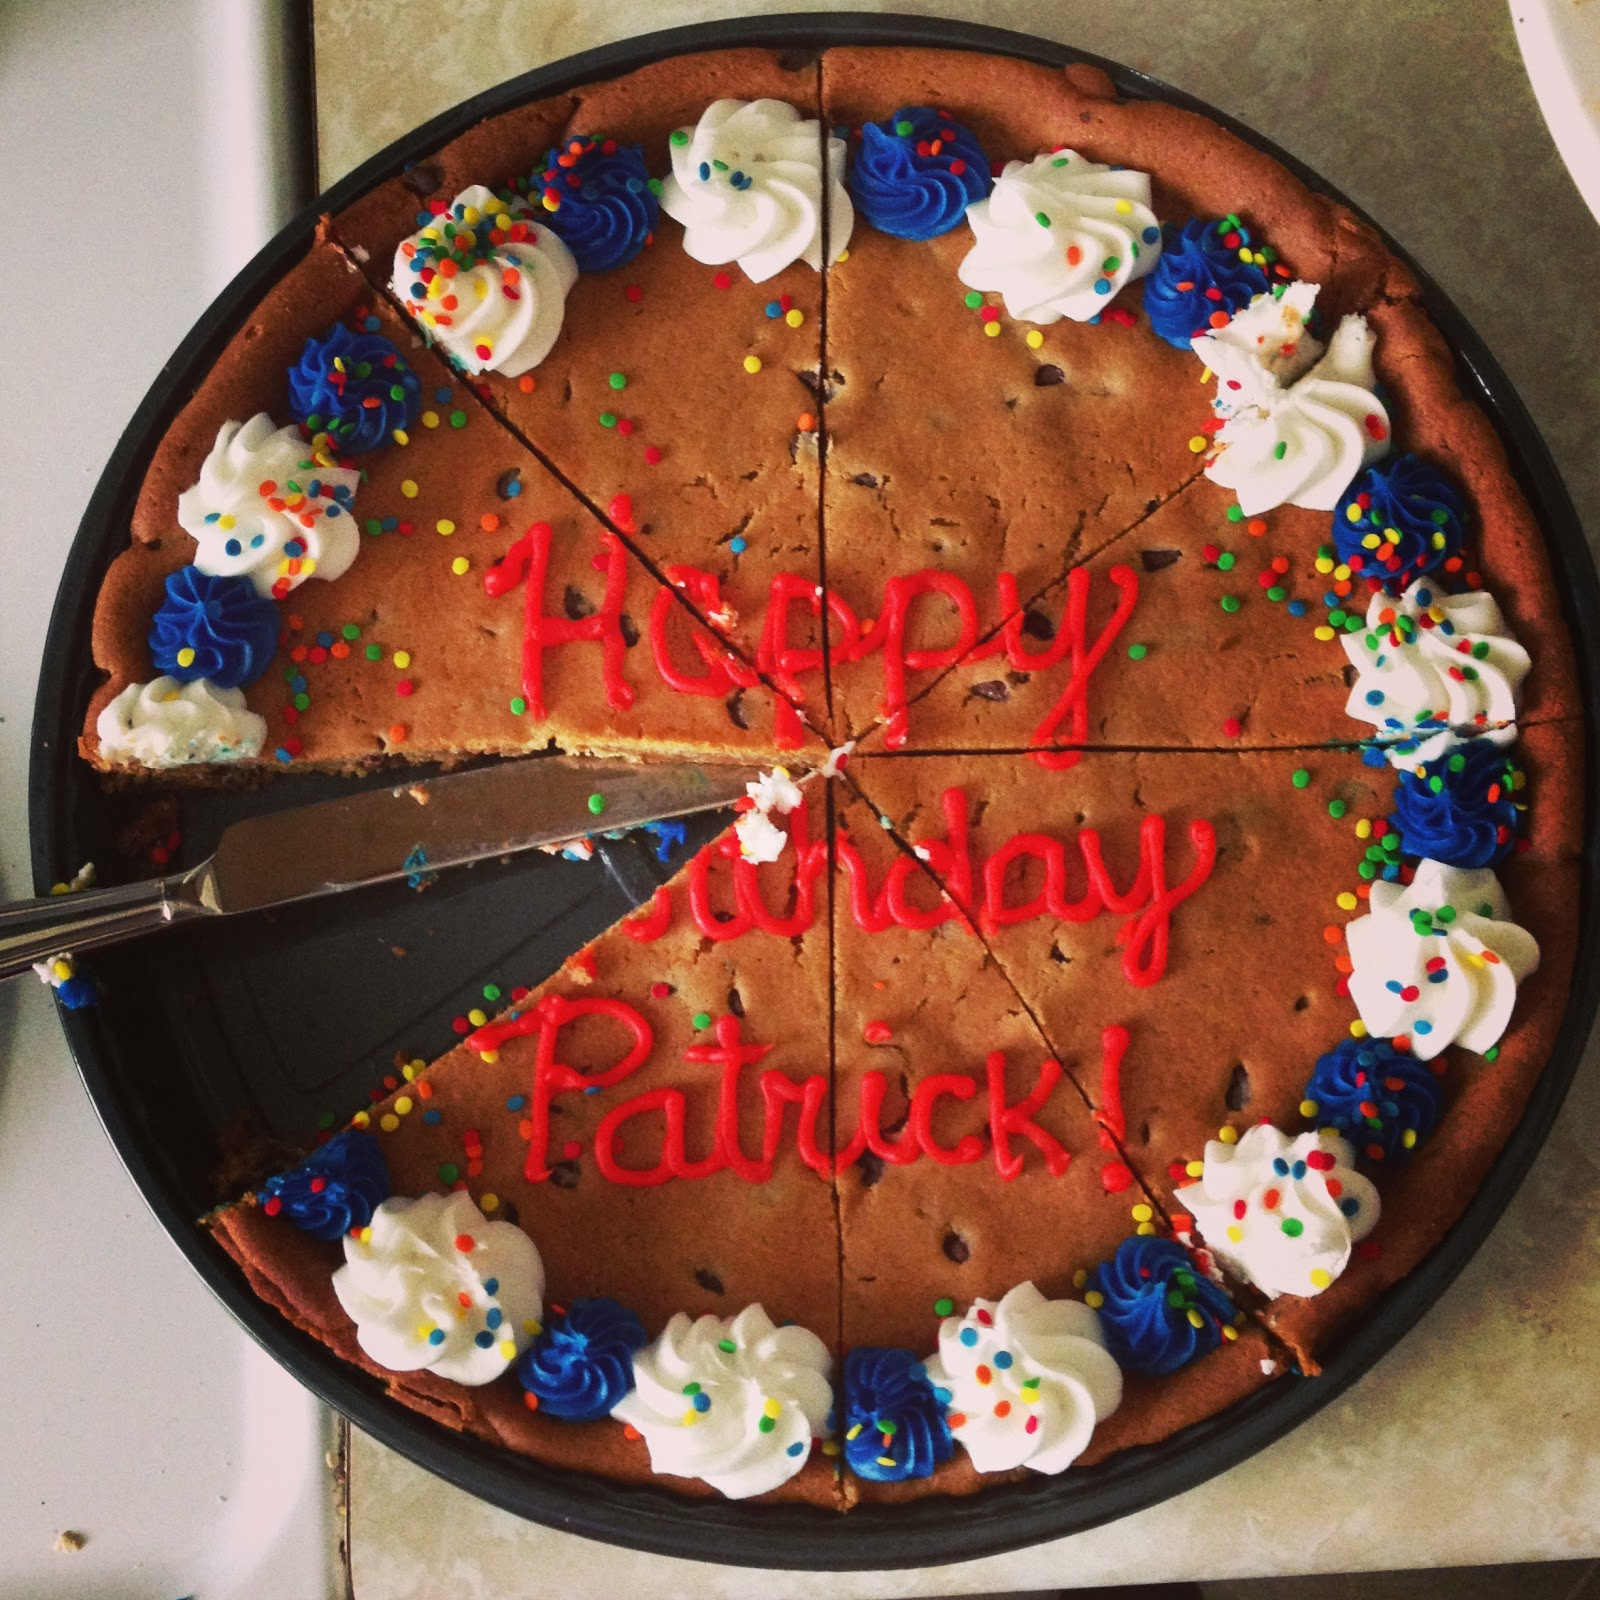 Happy Birthday Patrick Cake
 This Captivating Love March 2013